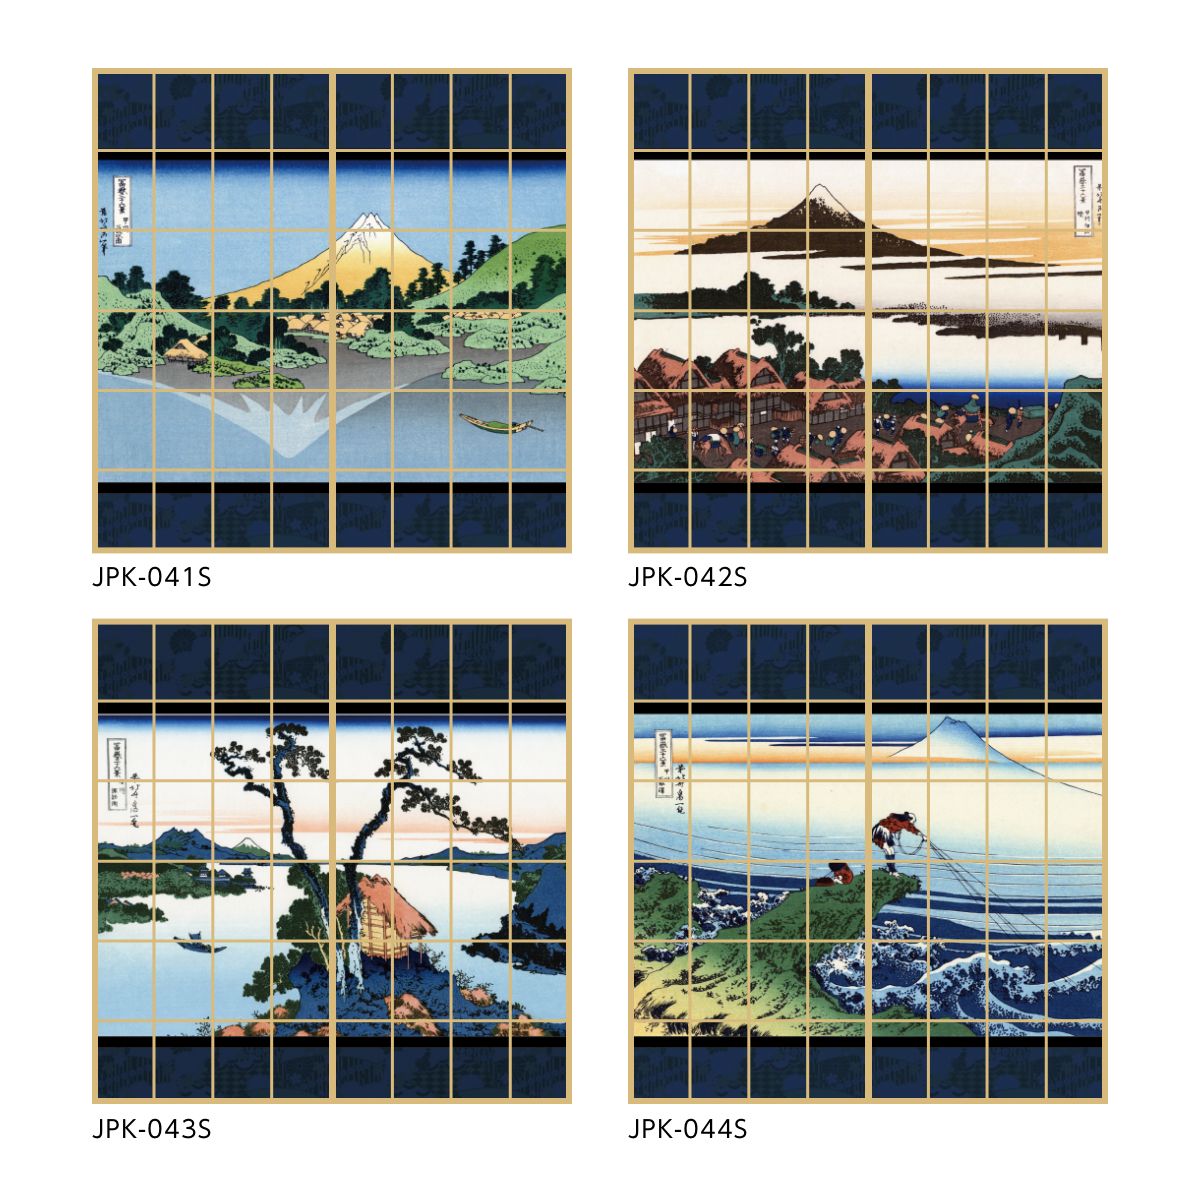 Shoji Paper Japanese Pattern Ukiyoe Katsushika Hokusai Soshu Umezawa Sho 2 Sheets 1 Set Glue Type Width 91cm x Length 182cm Shoji Shoji Paper Shoji Modern Asahipen JPK-029S